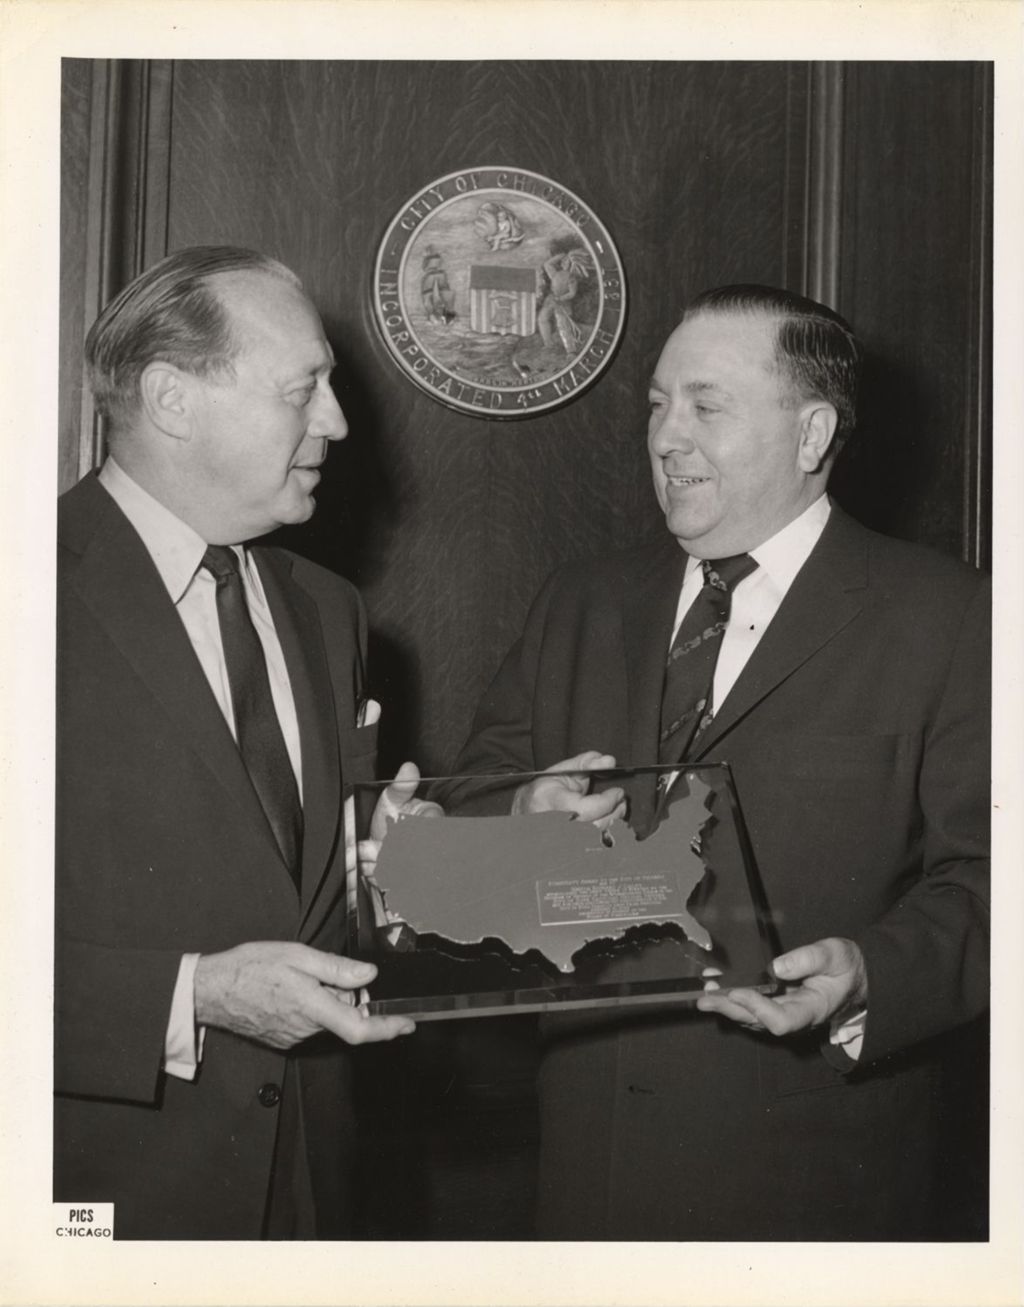 Miniature of Richard J. Daley accepts an award plaque